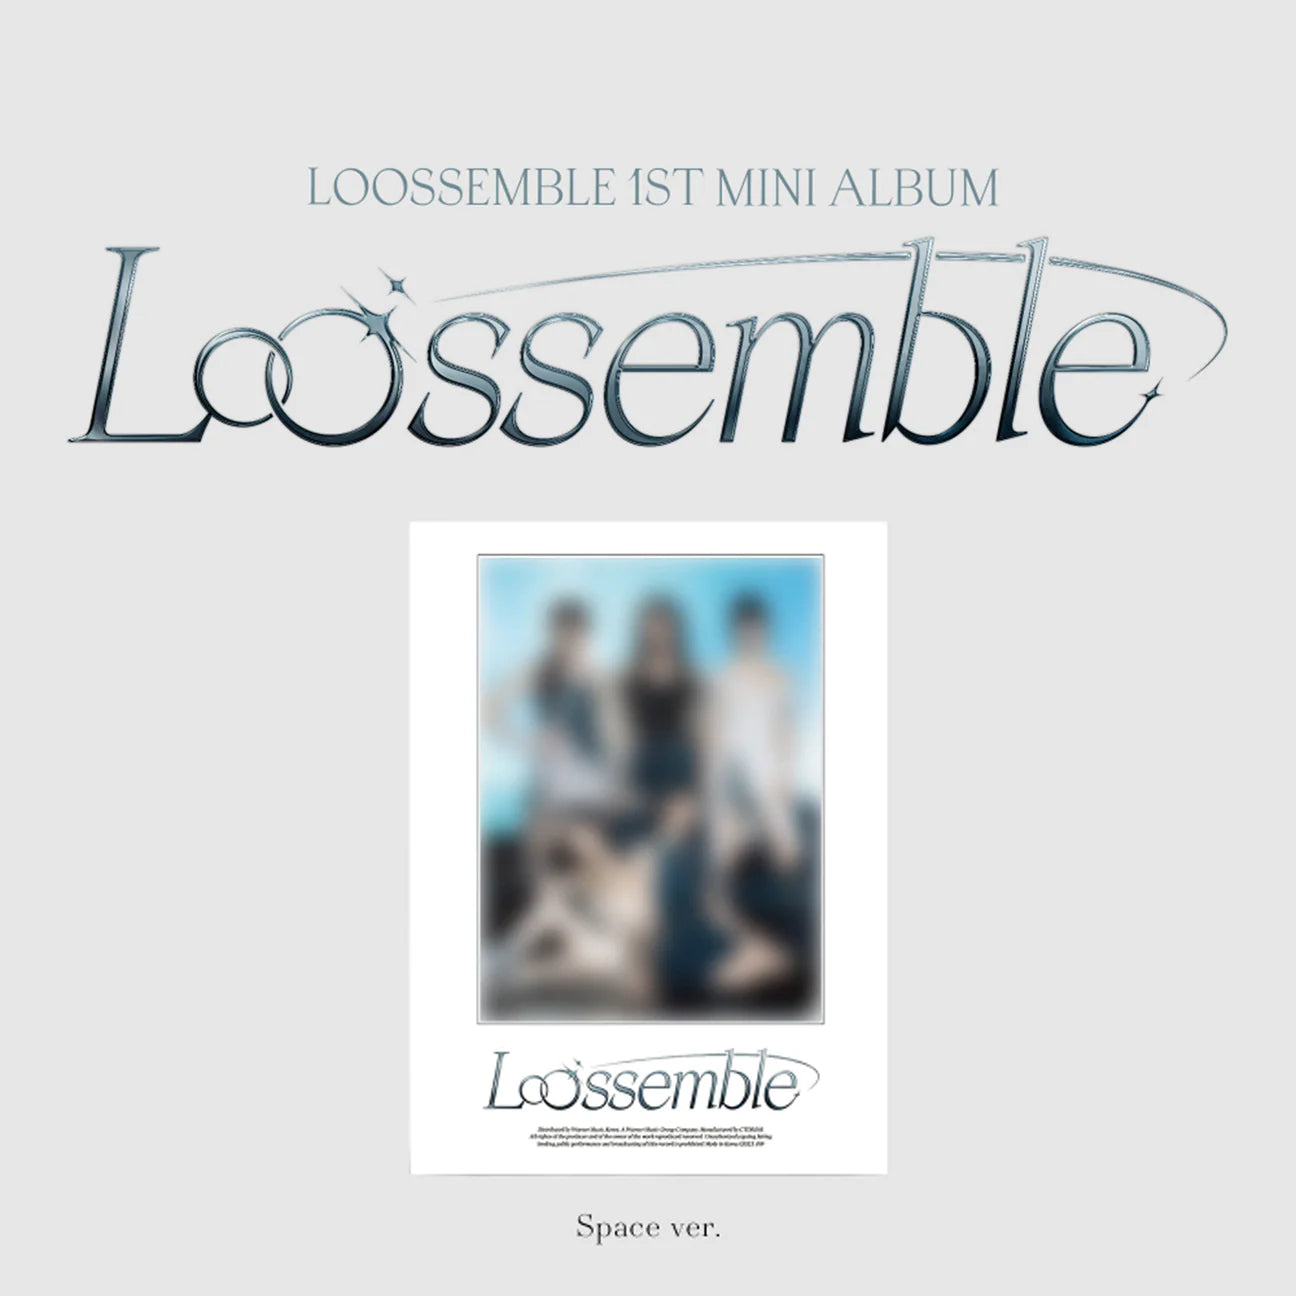 LOOSSEMBLE - 1ST MINI ALBUM [LOOSSEMBLE] (3 VERSIONS)